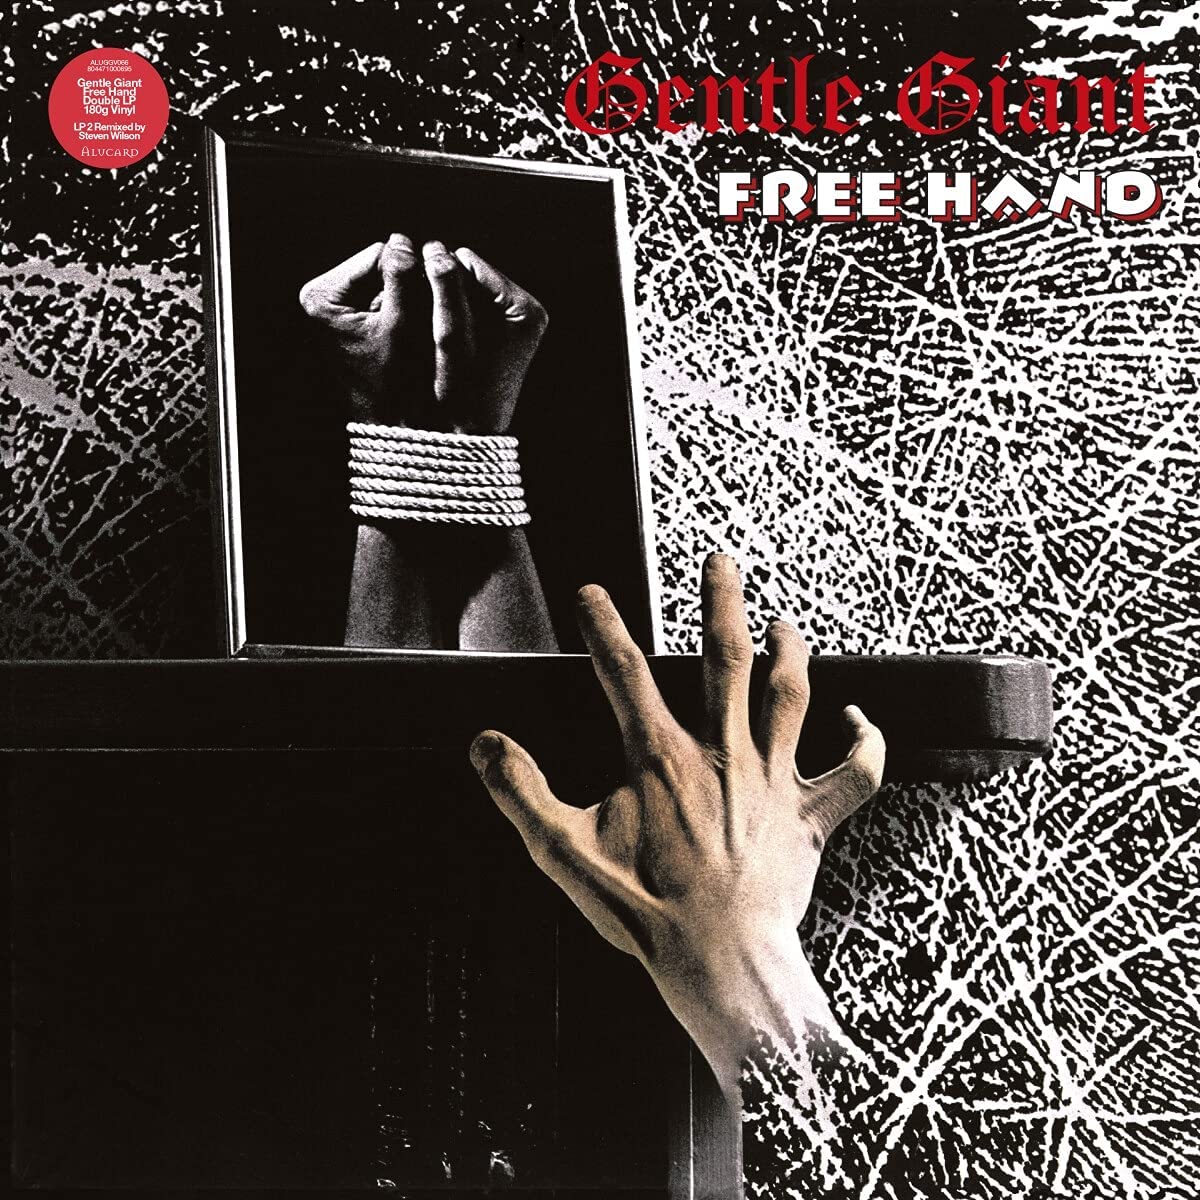 Gentle Giant - Free Hand (2021 Mix) - 2LP